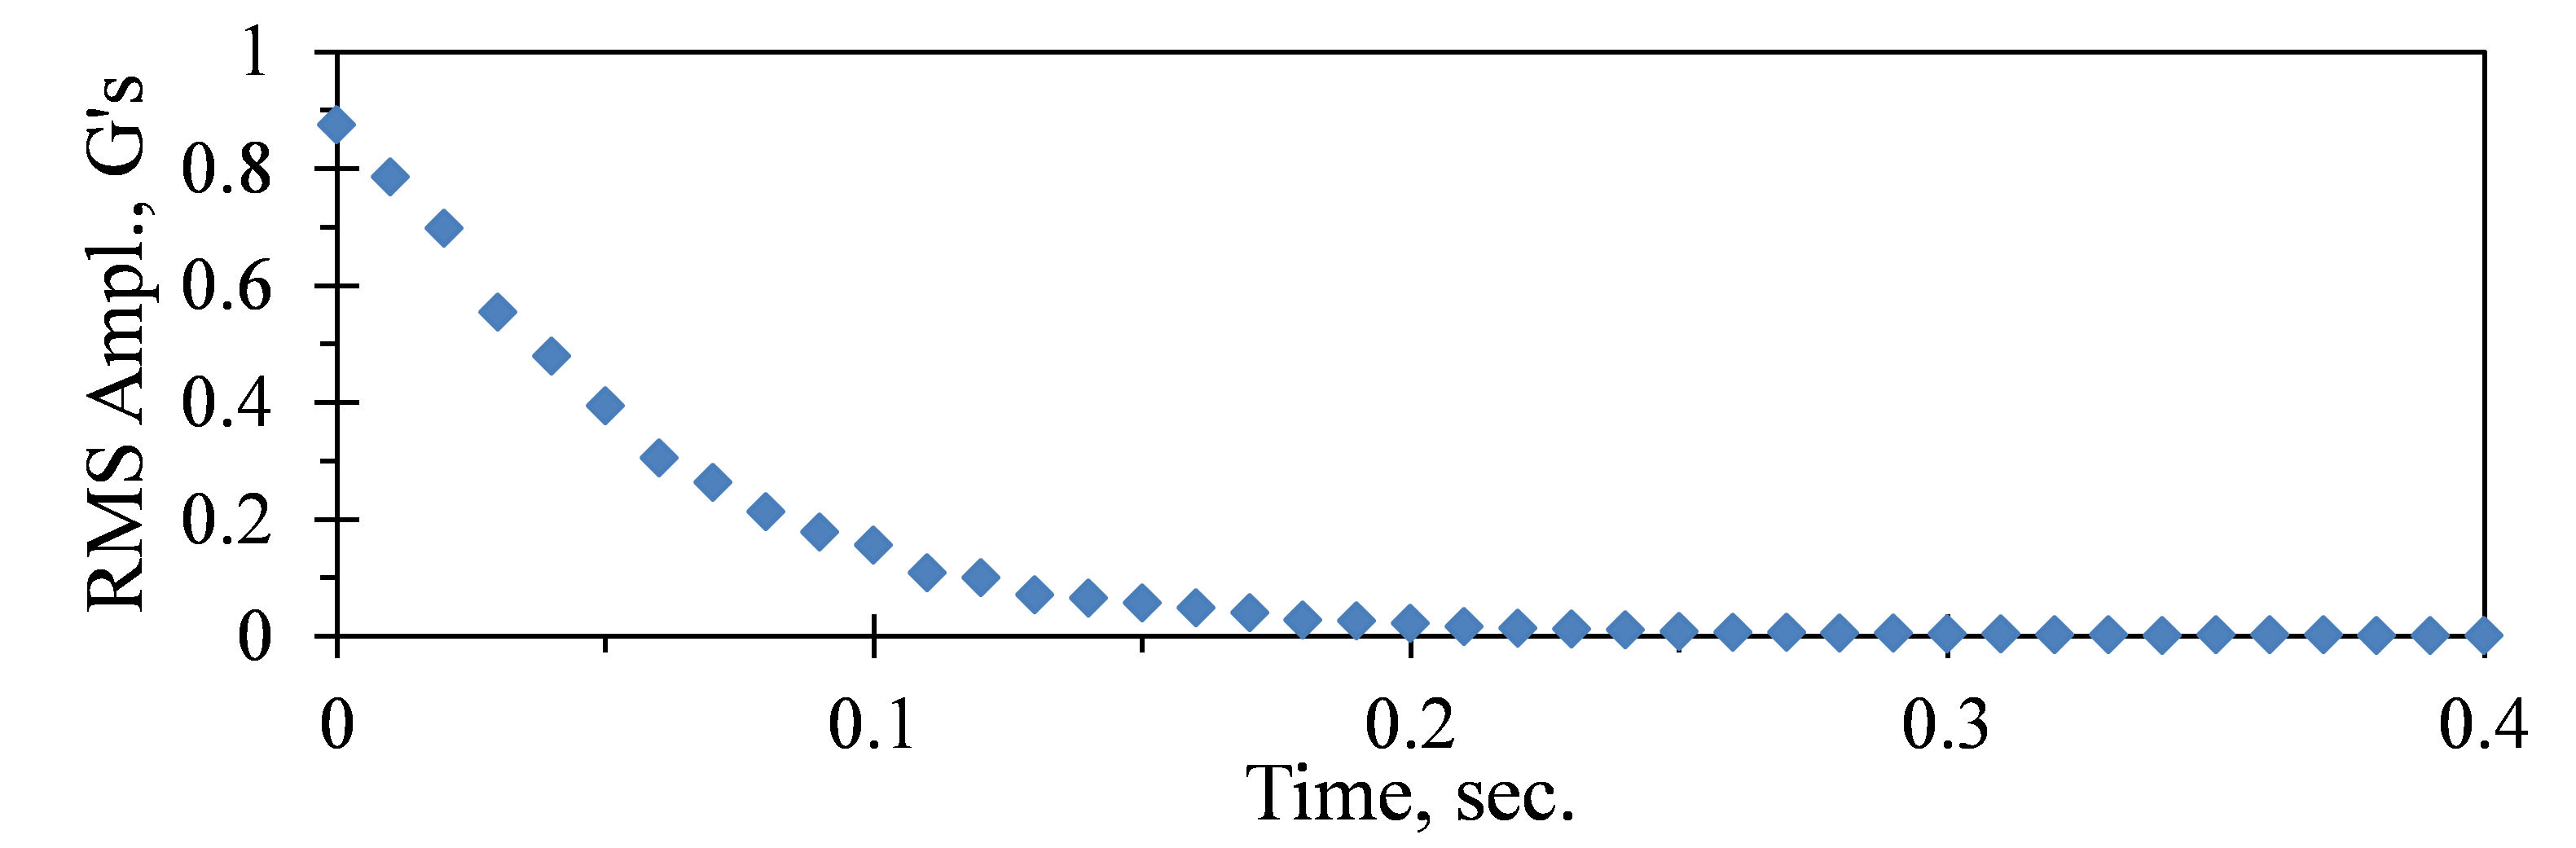 Regression Analysis - Figure 19a